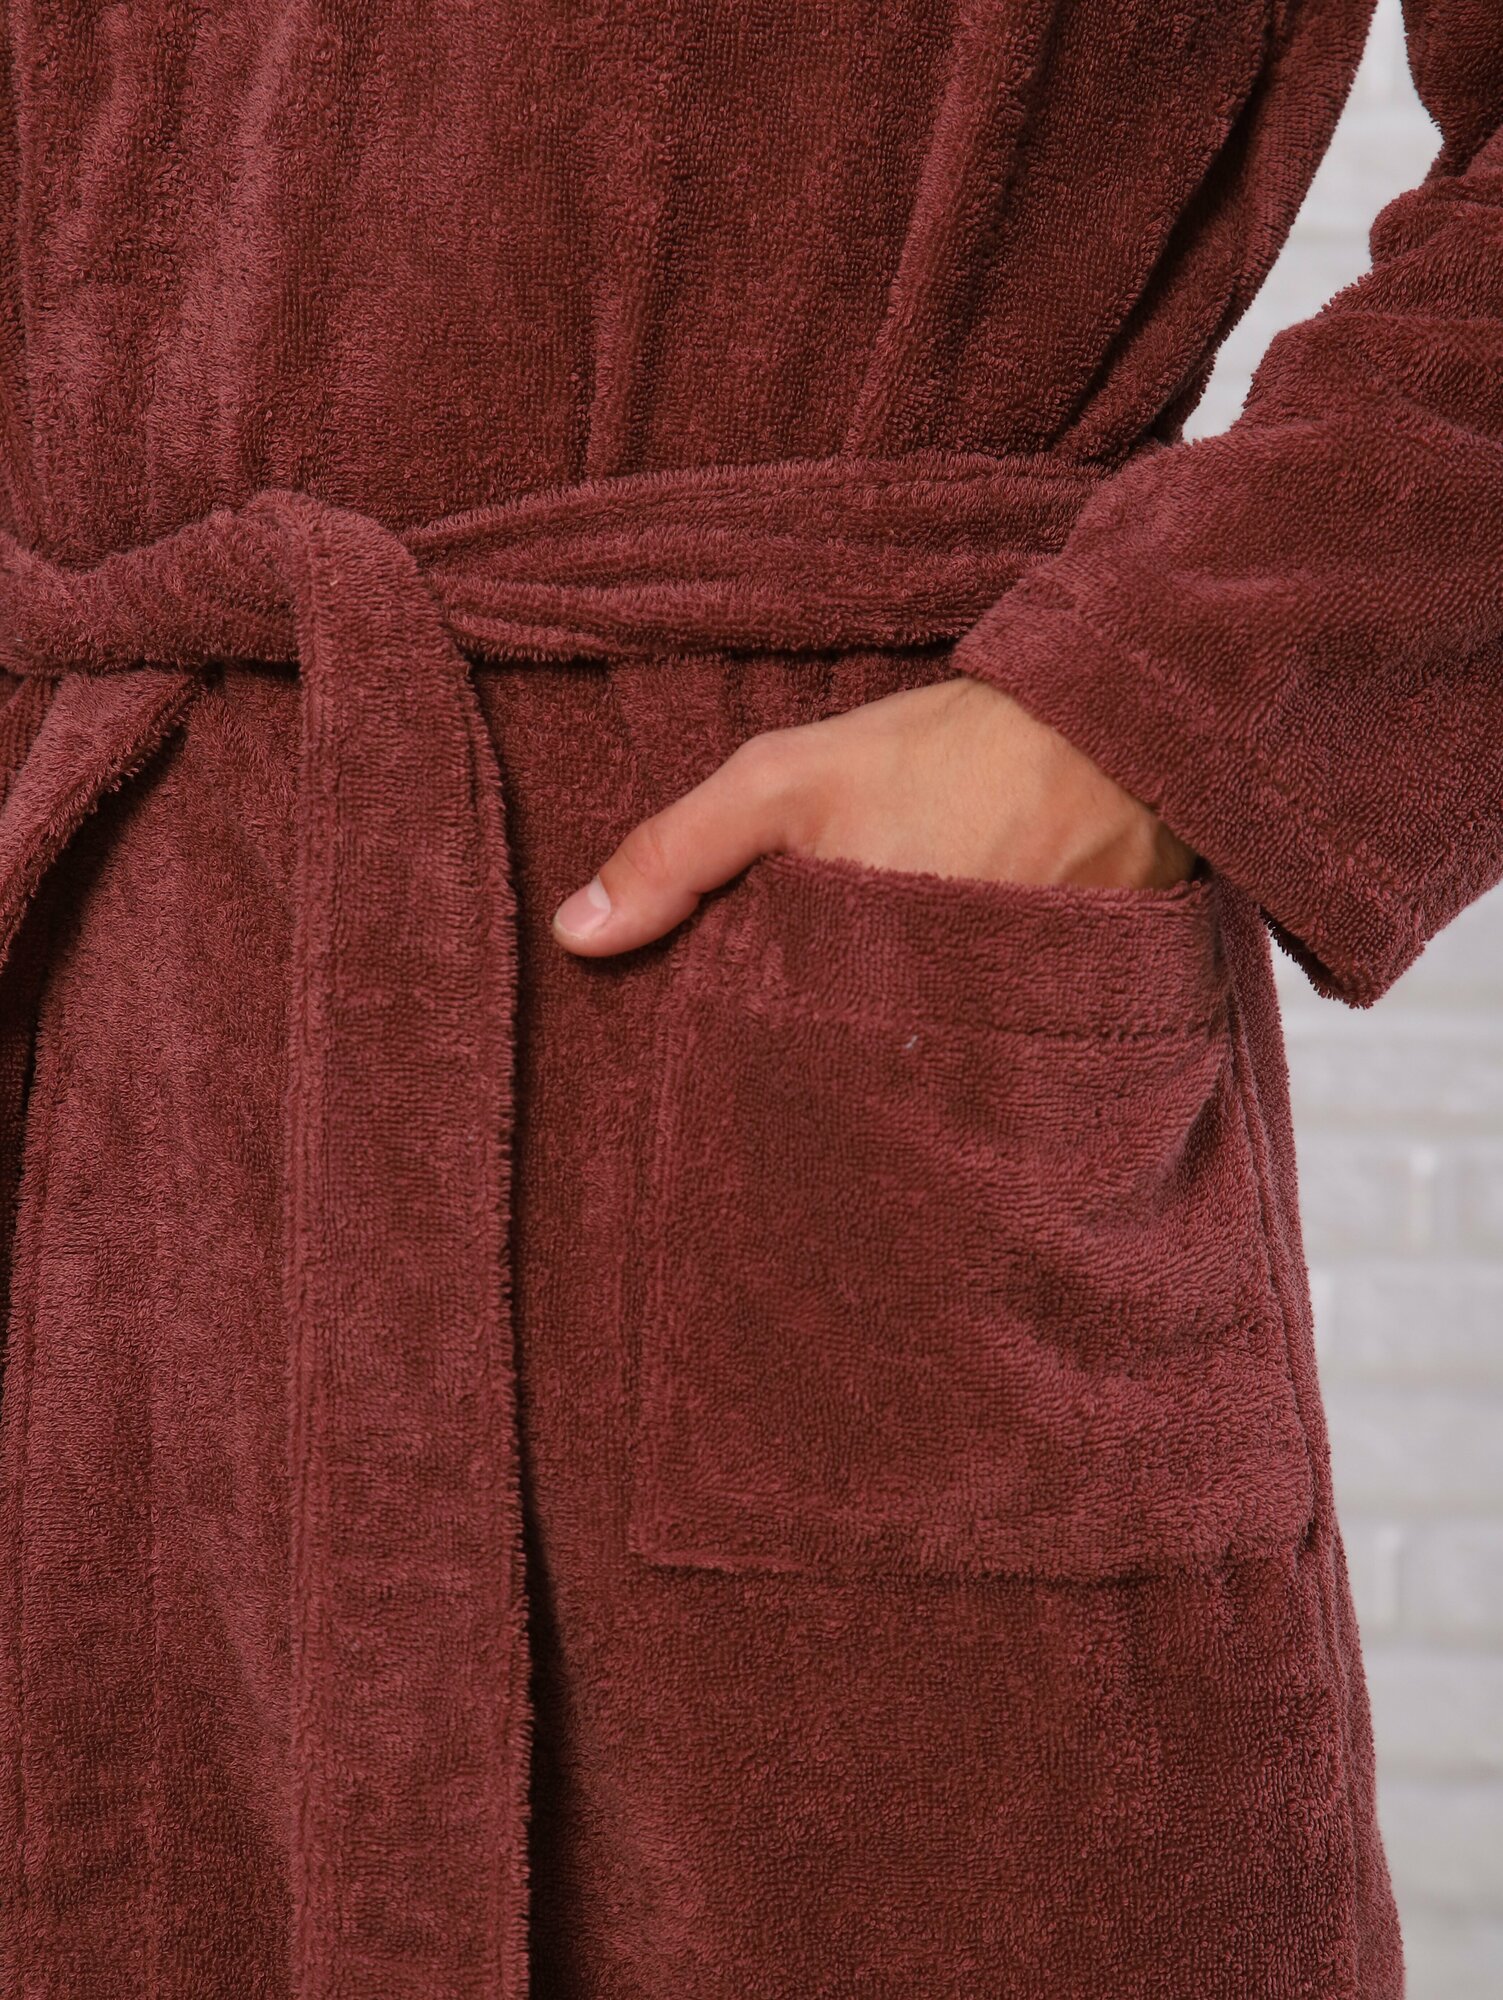 Халат мужской махровый, халат банный, домашний халат - фотография № 7